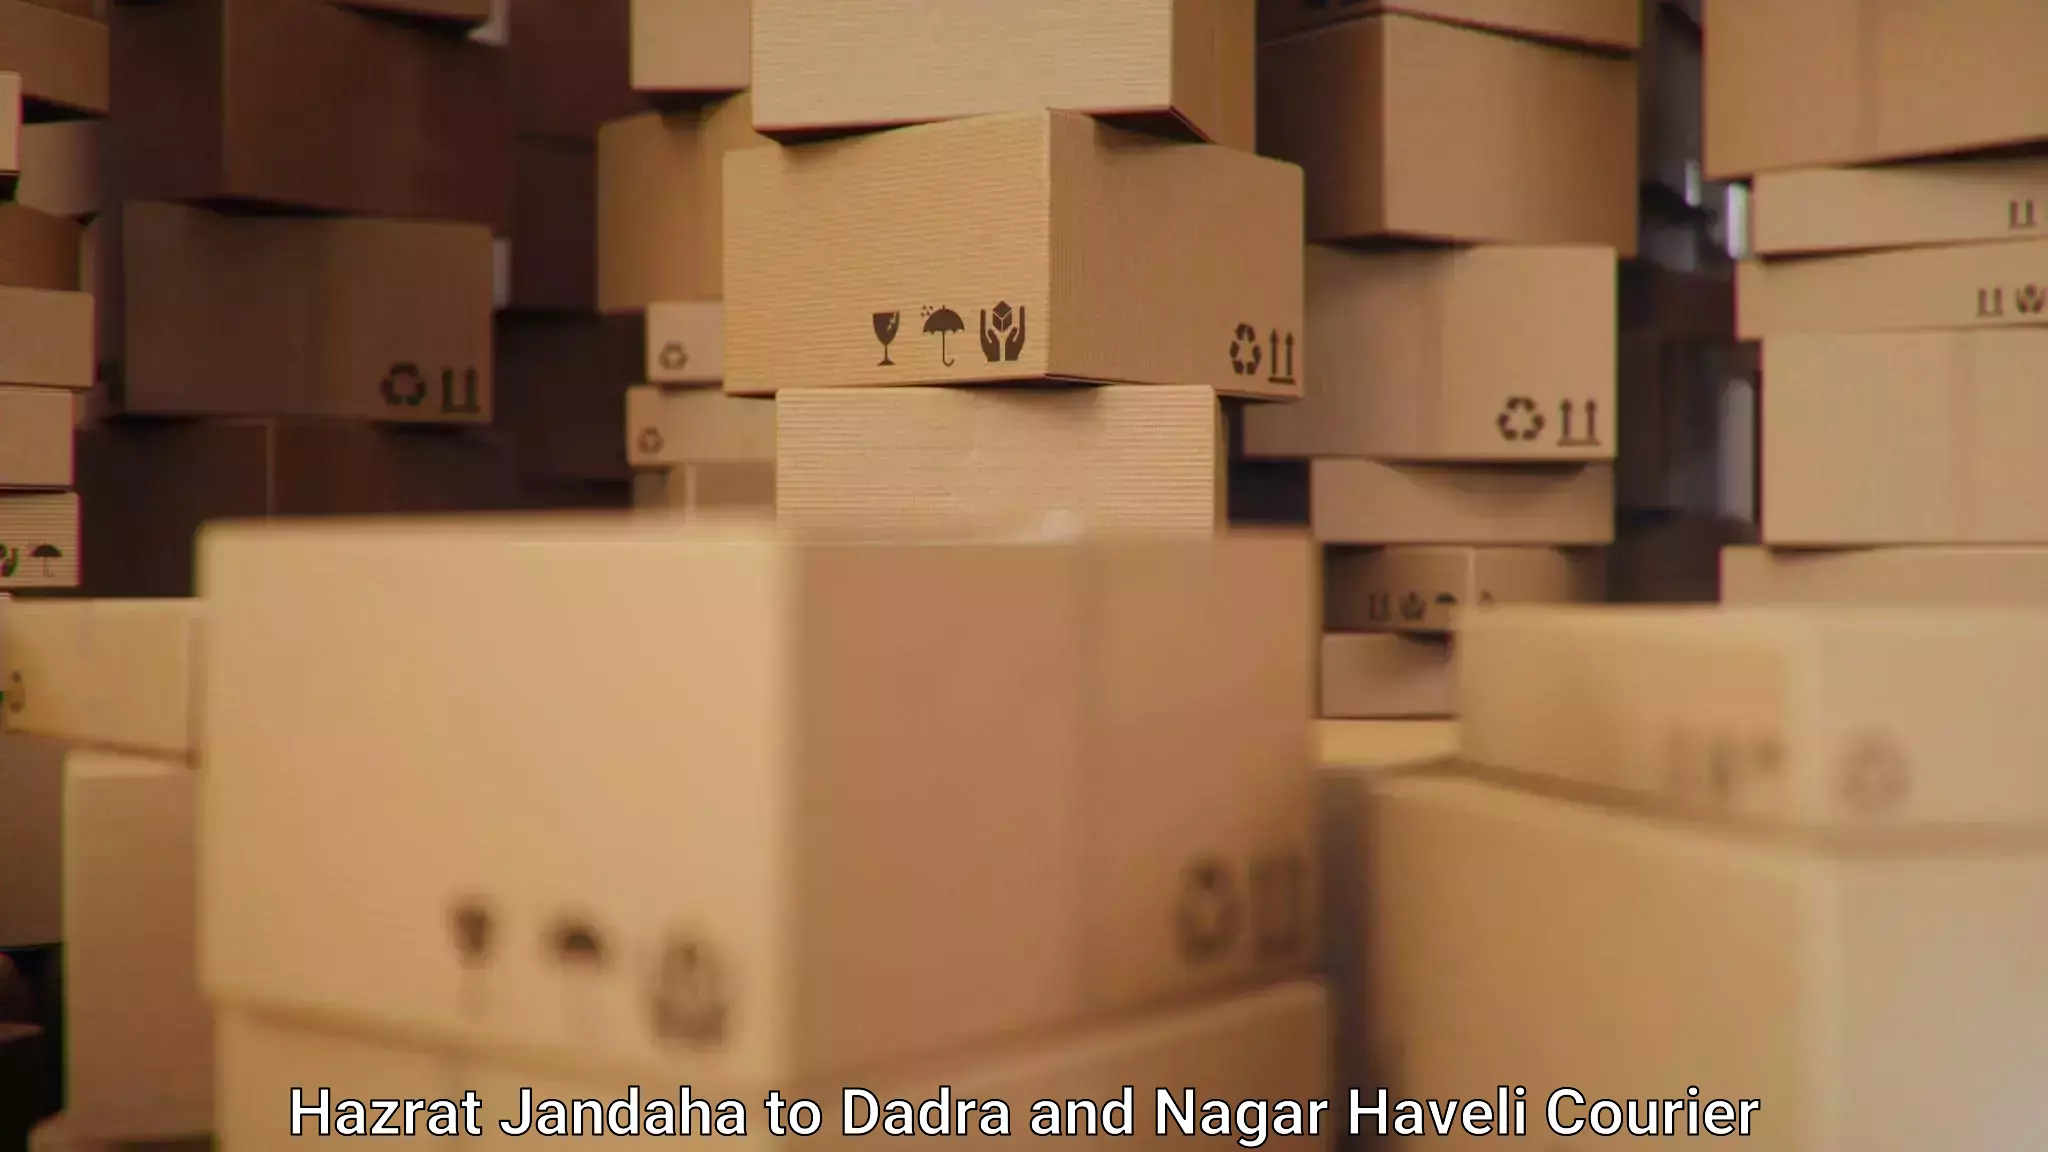 Courier service partnerships Hazrat Jandaha to Dadra and Nagar Haveli